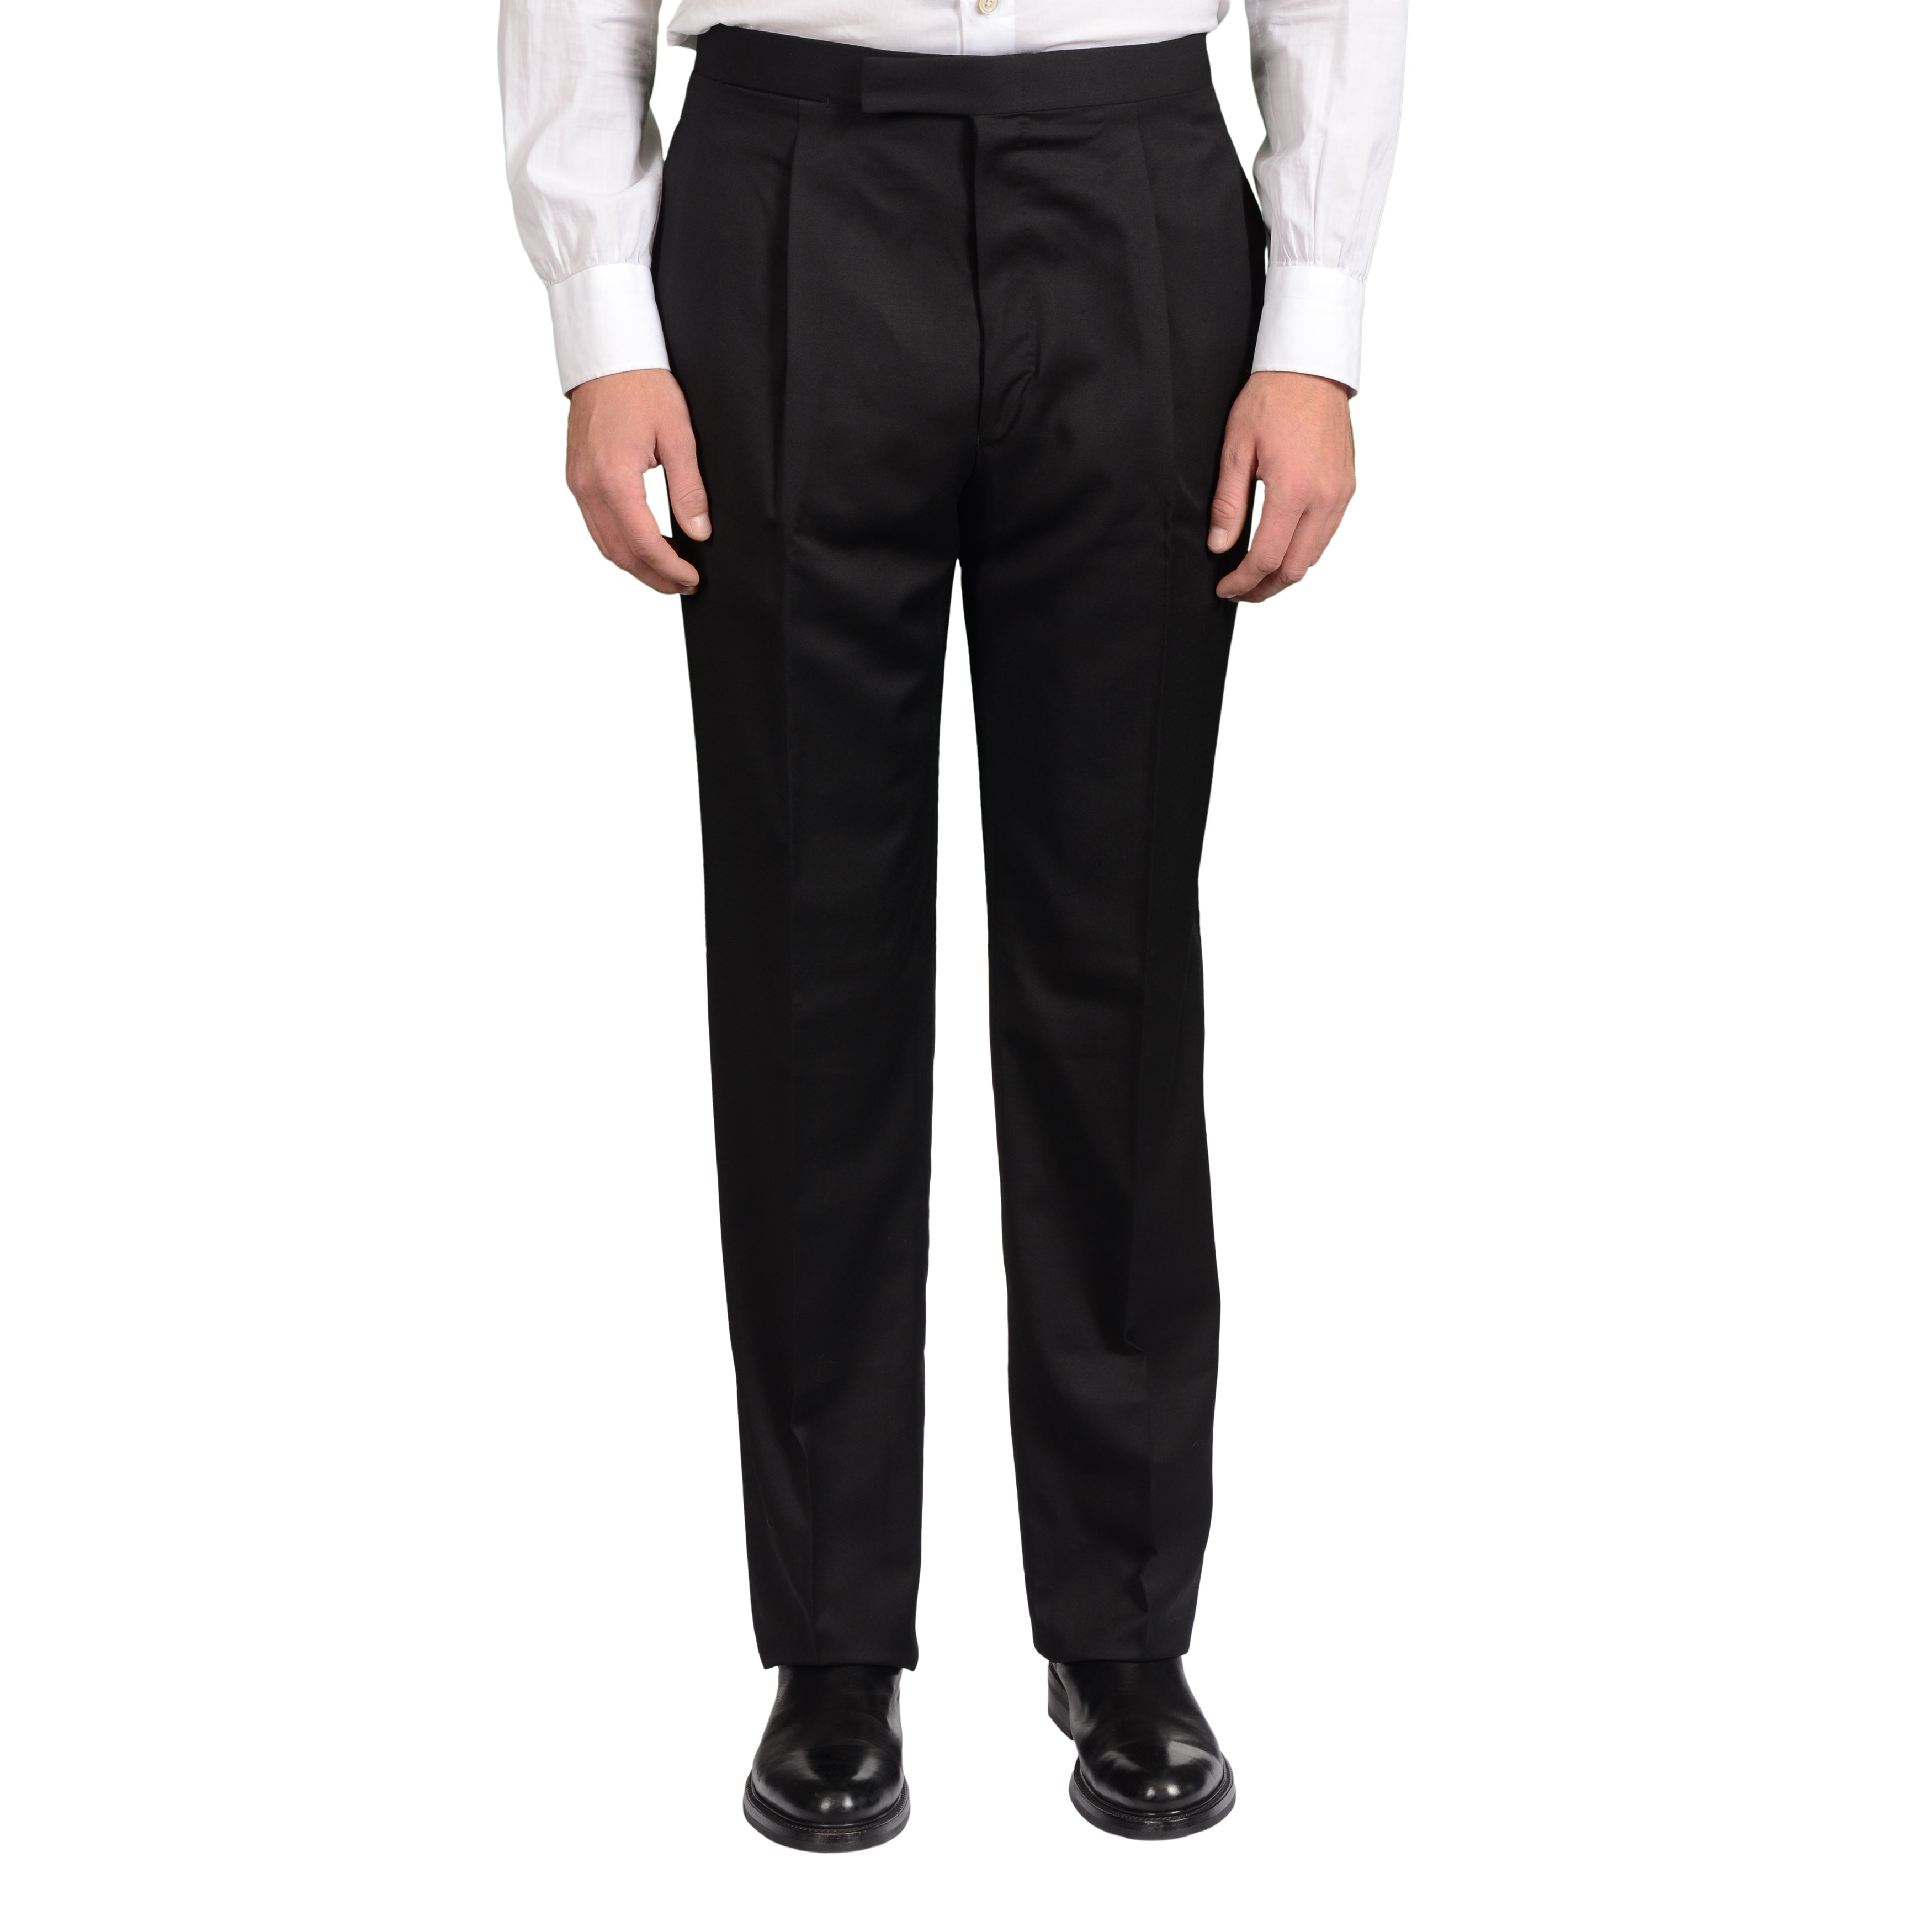 GARY ANDERSON Handmade Black Wool SP Tuxedo Dress Pants EU 50 NEW US 34